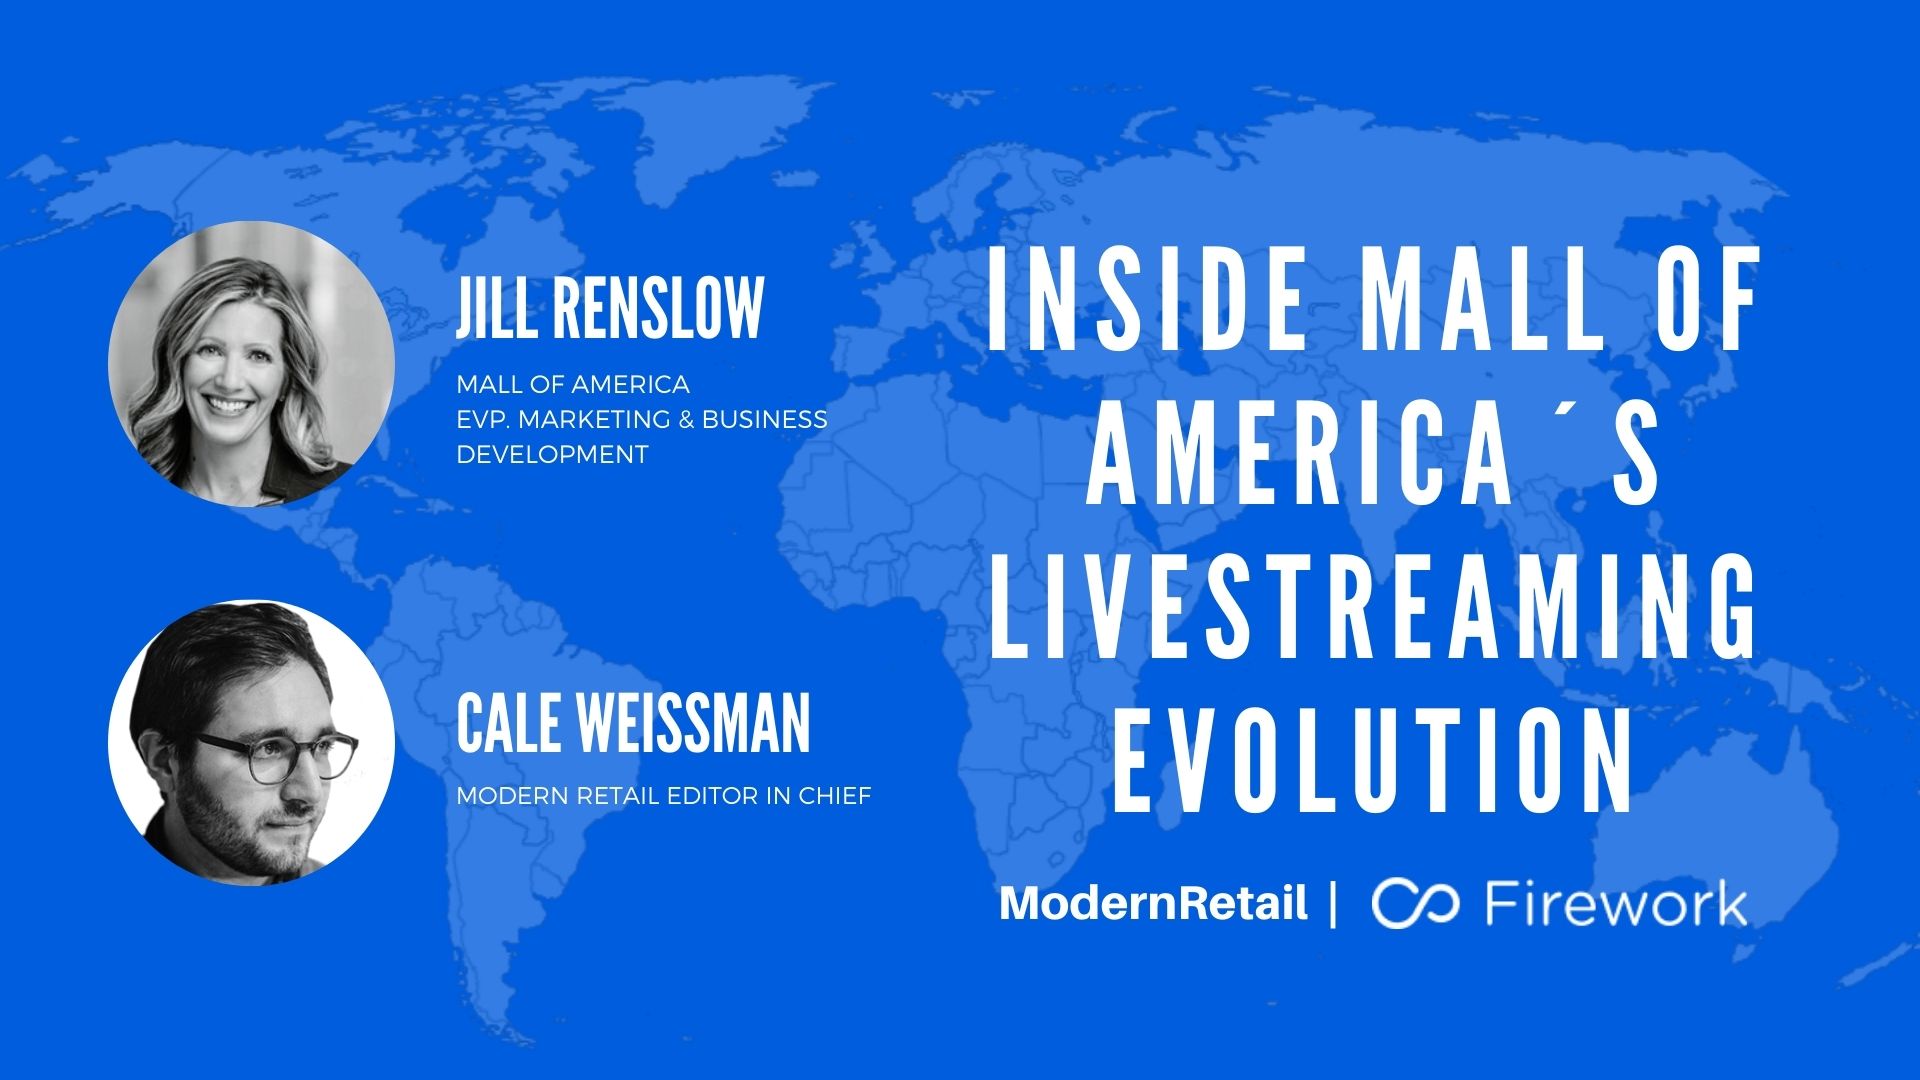 Inside-Mall-of-Americas-Livestreaming-Evolution